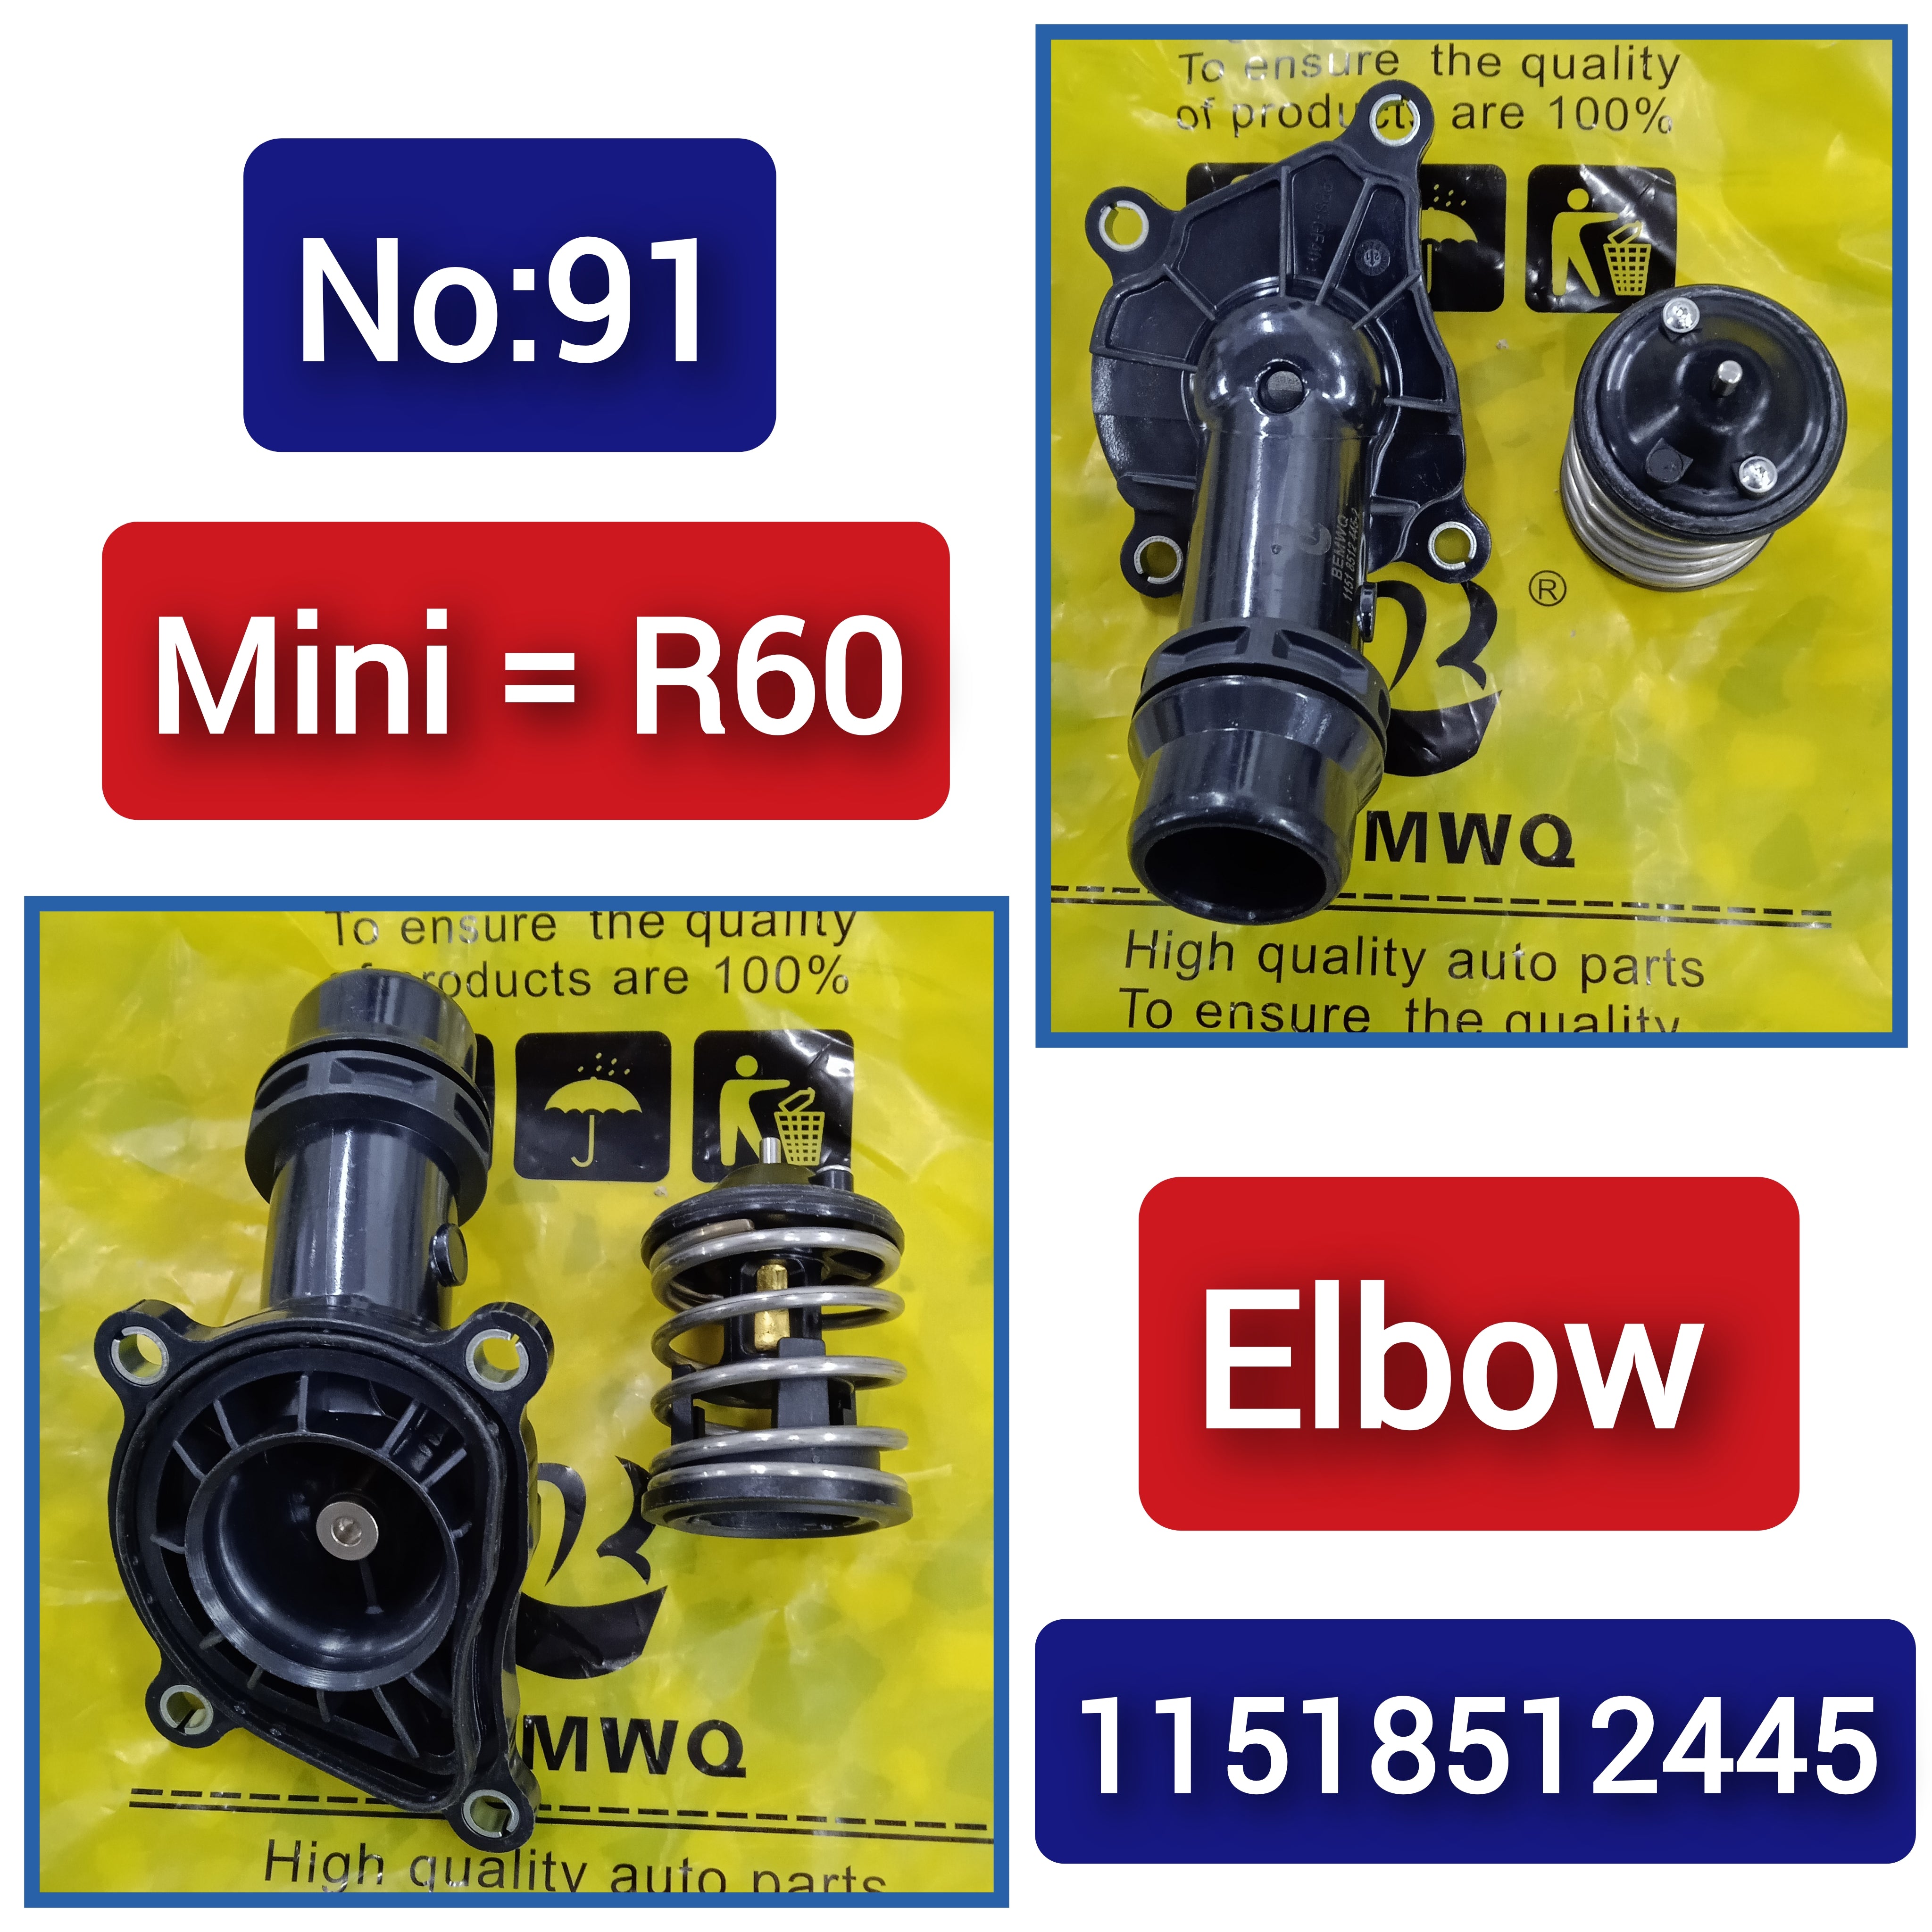 Elbow (Thermostat) 11518512445 For MINI COUNTRYMAN R60 Tag-E-91